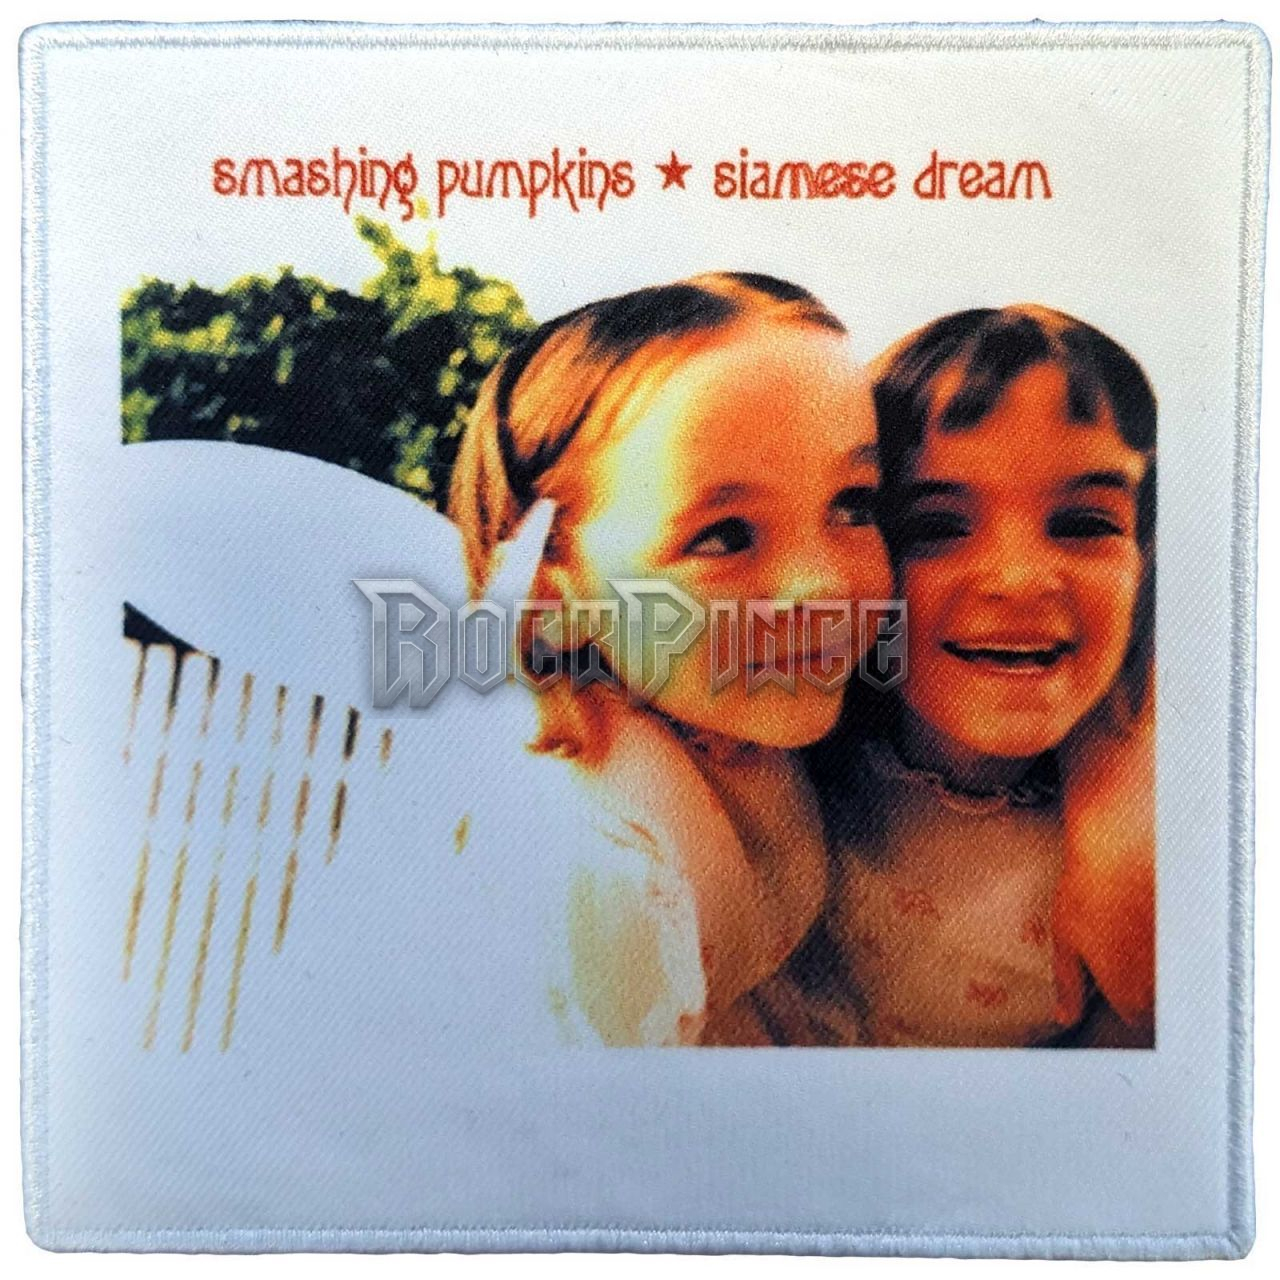 The Smashing Pumpkins - Siamese Dream Album Cover - kisfelvarró - SMPPAT03